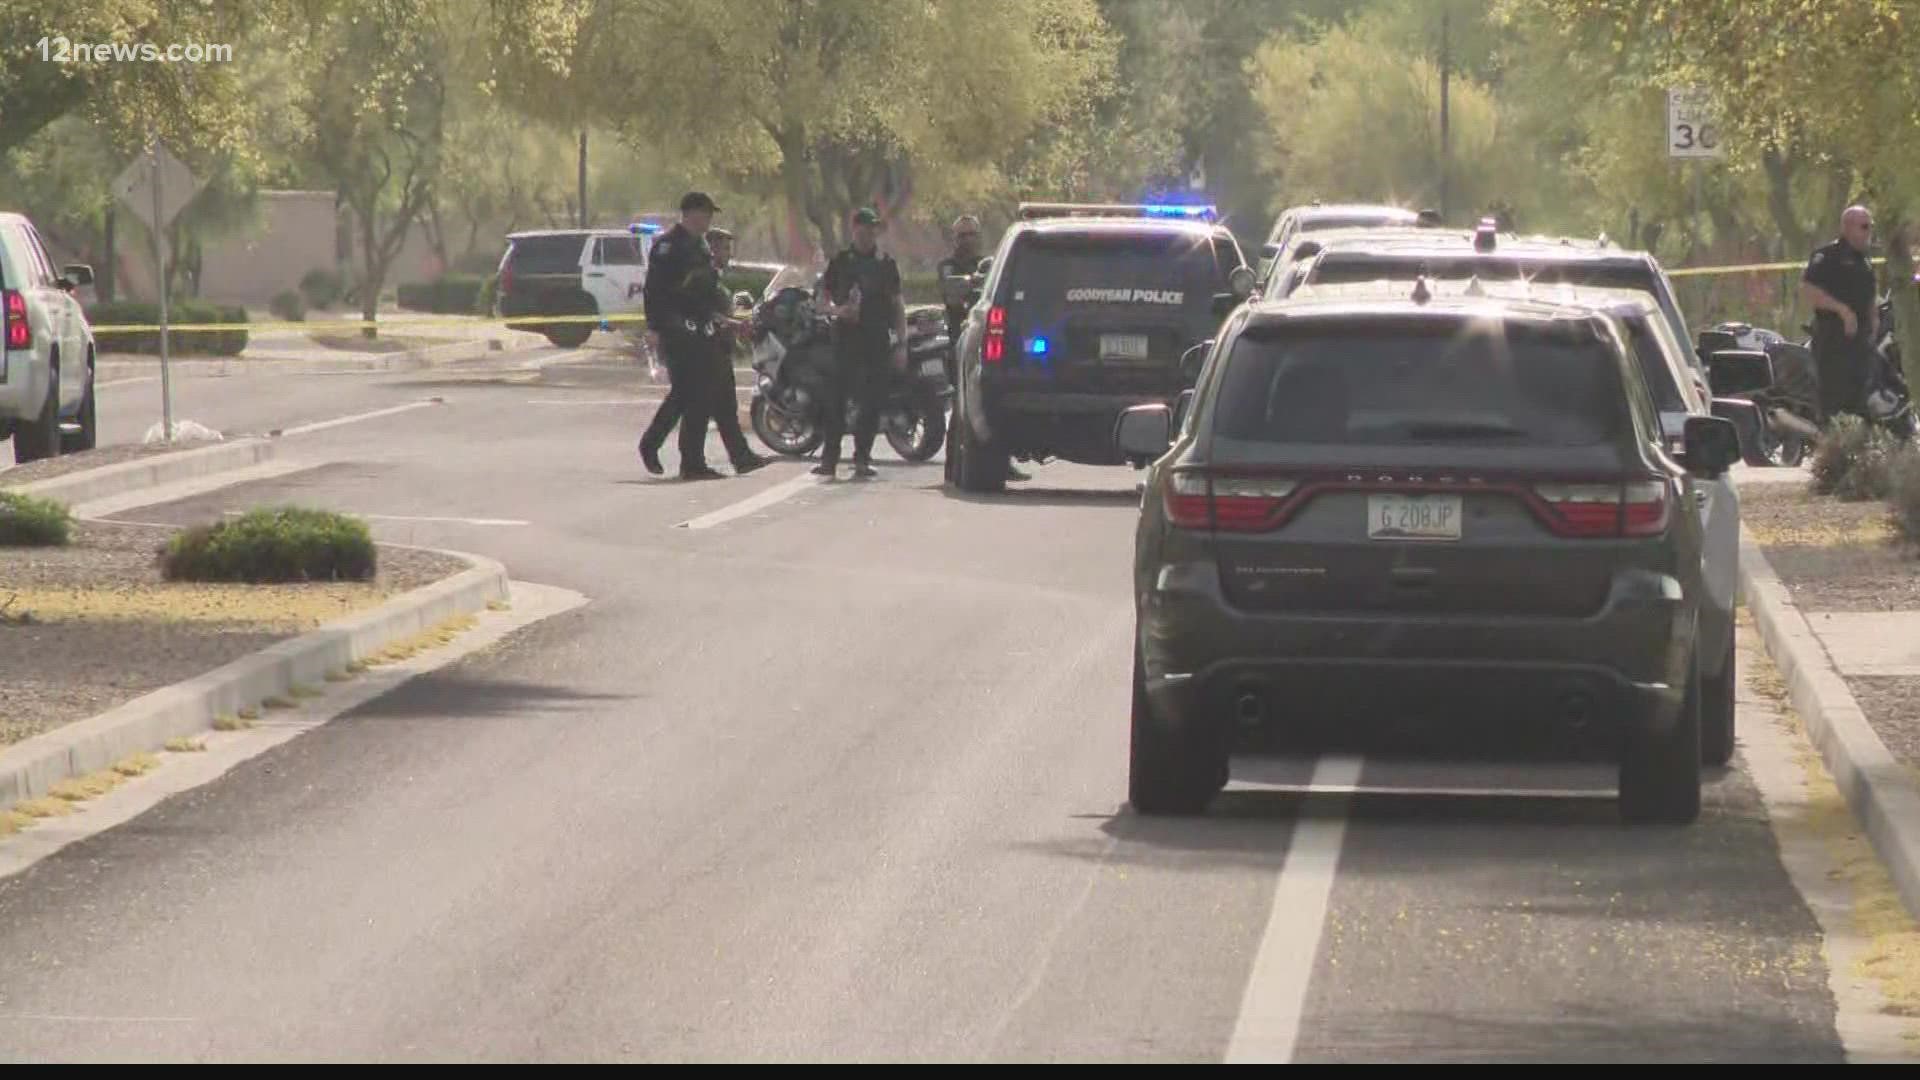 The crash happened near 182nd and San Gabriel drives, police said.